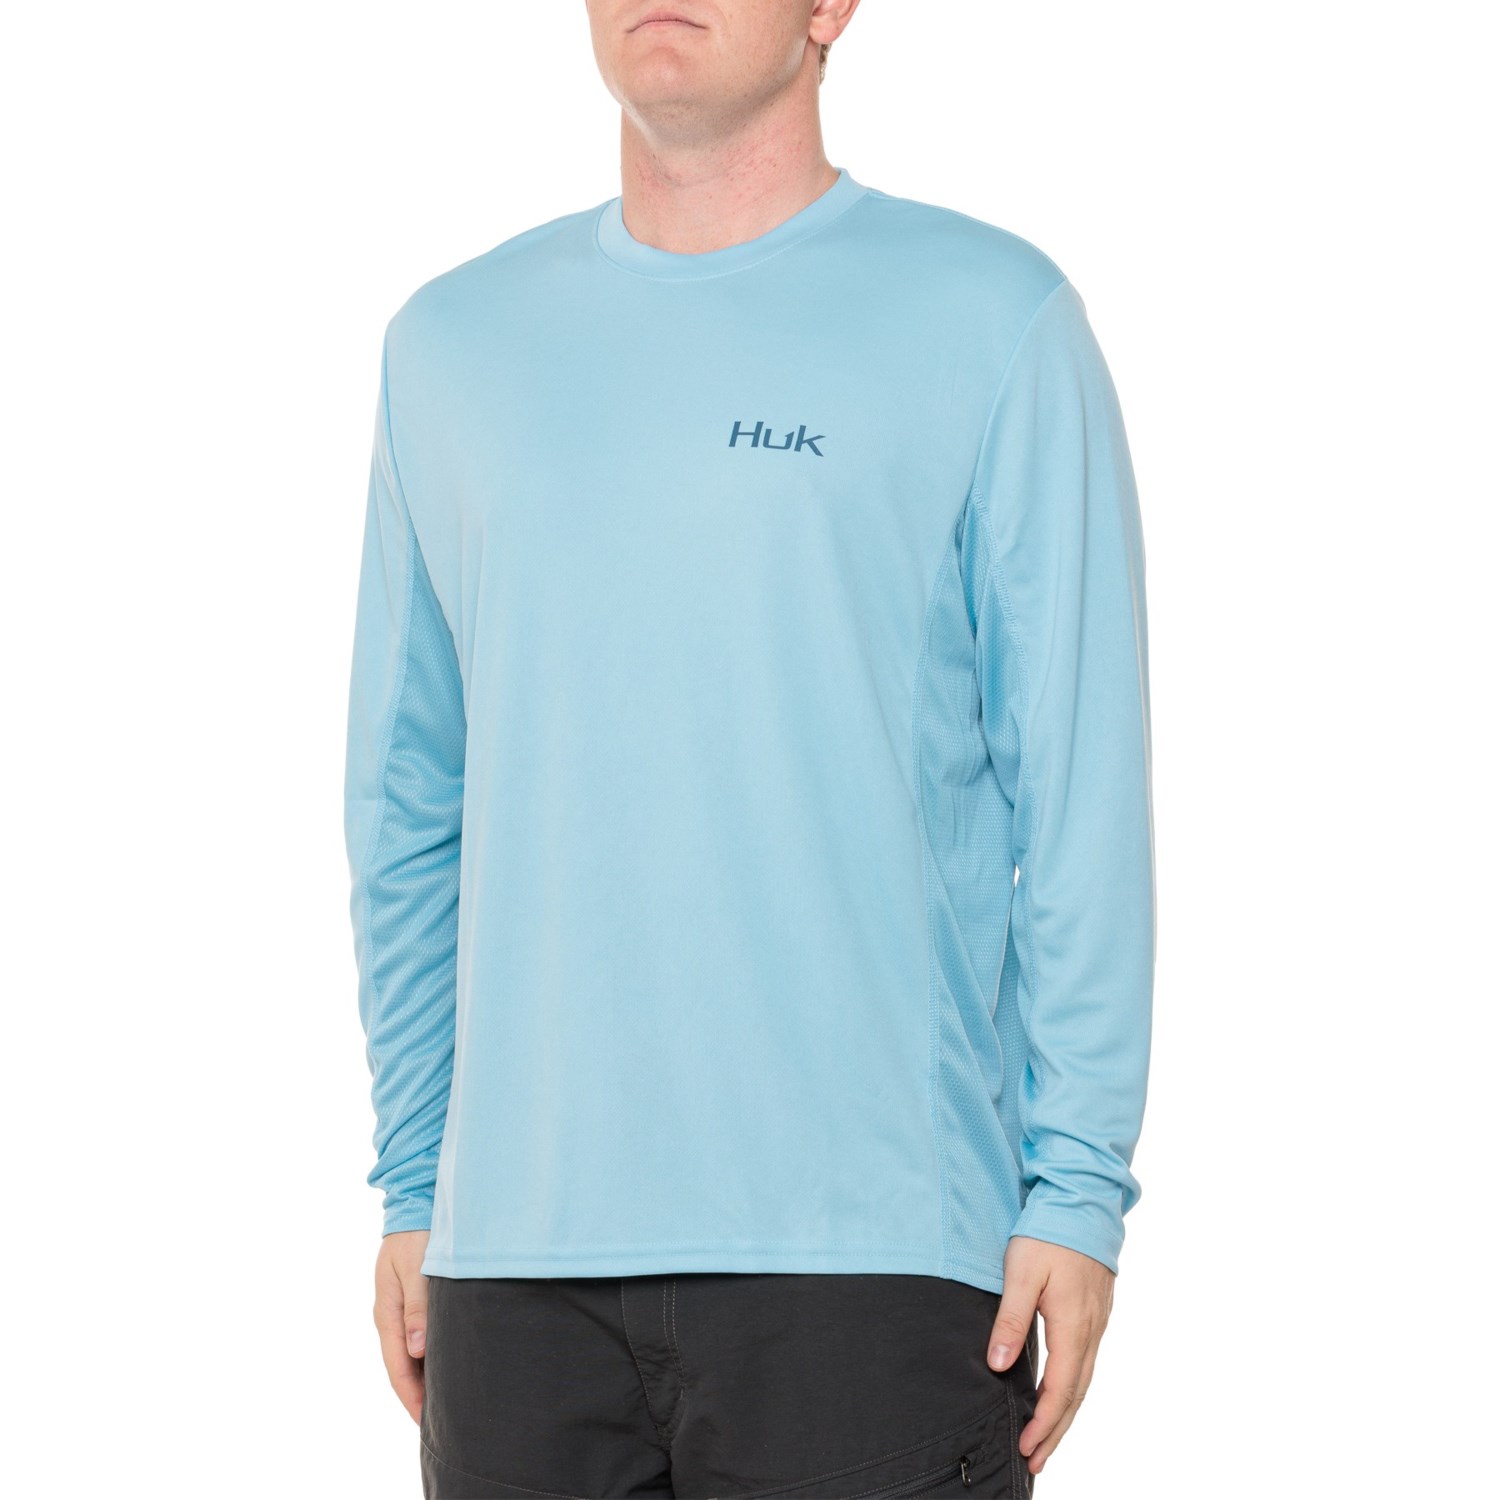 Huk Men's Icon x Long Sleeve Shirt, Medium, Baltic Sea